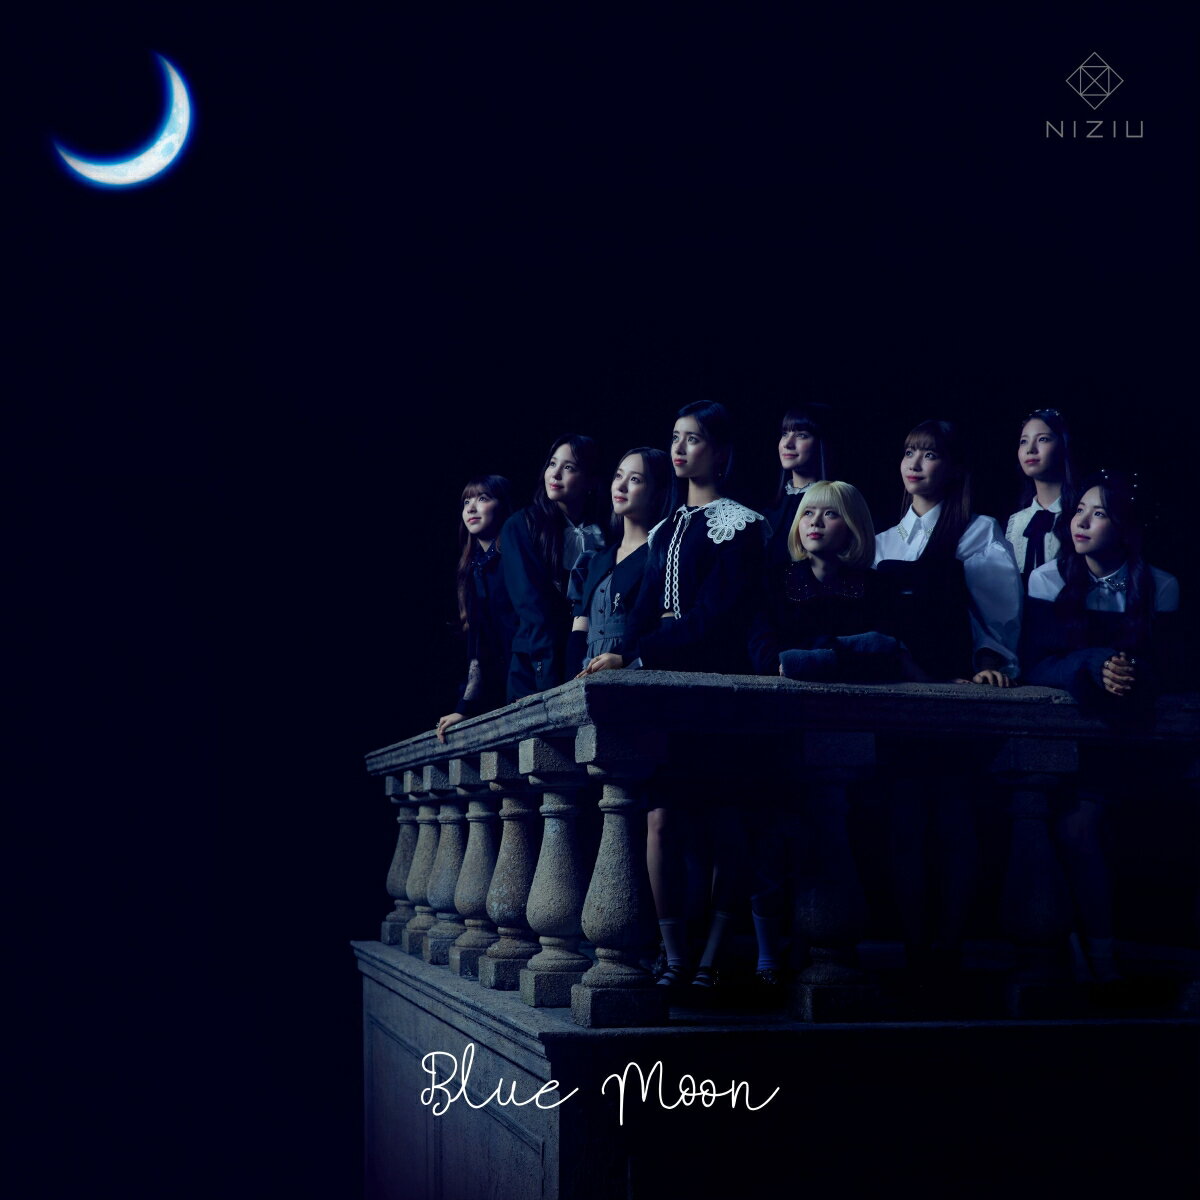 Blue Moon (通常盤)